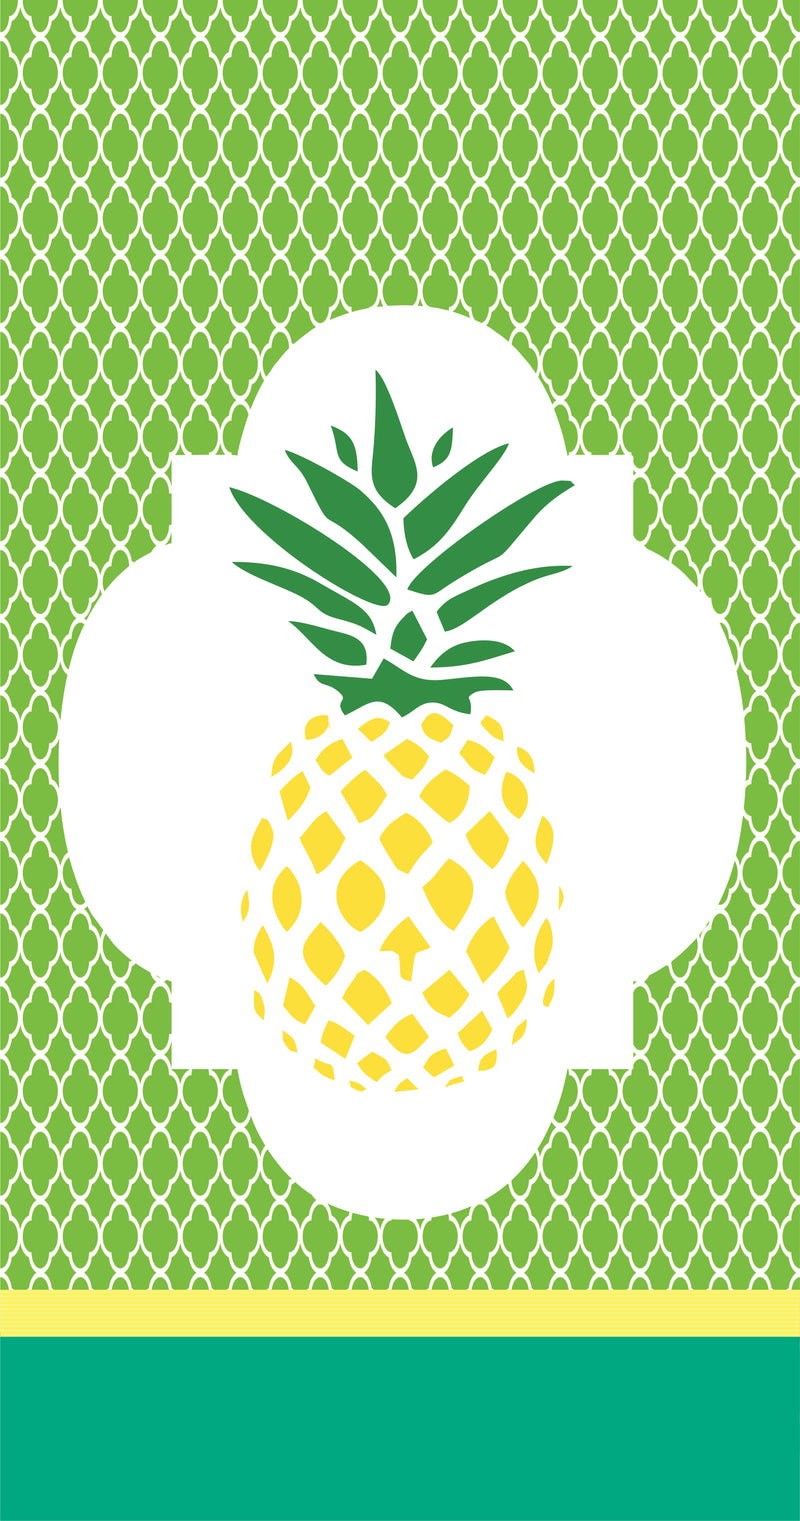 Garden Flags- quatrafoil pineapple